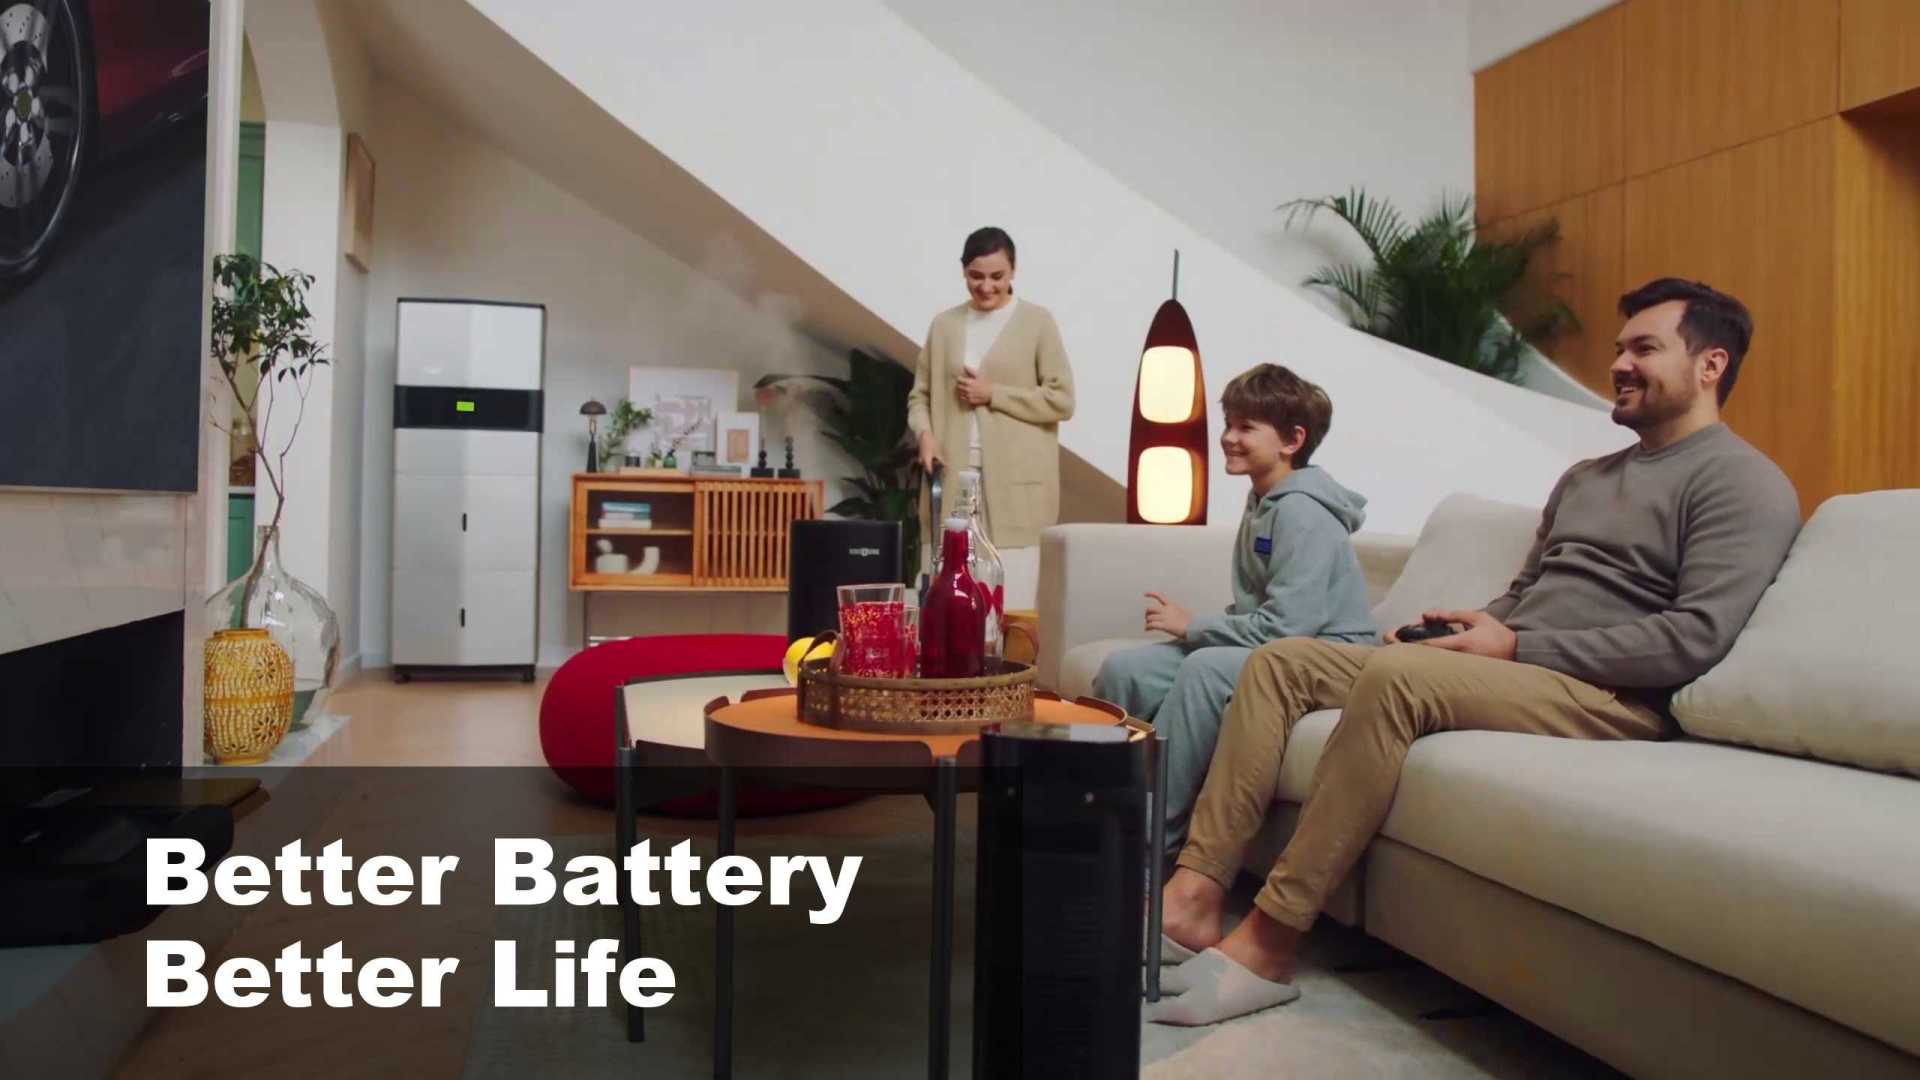 泽宝家用储能电源广告《Better Battery, Better Life》